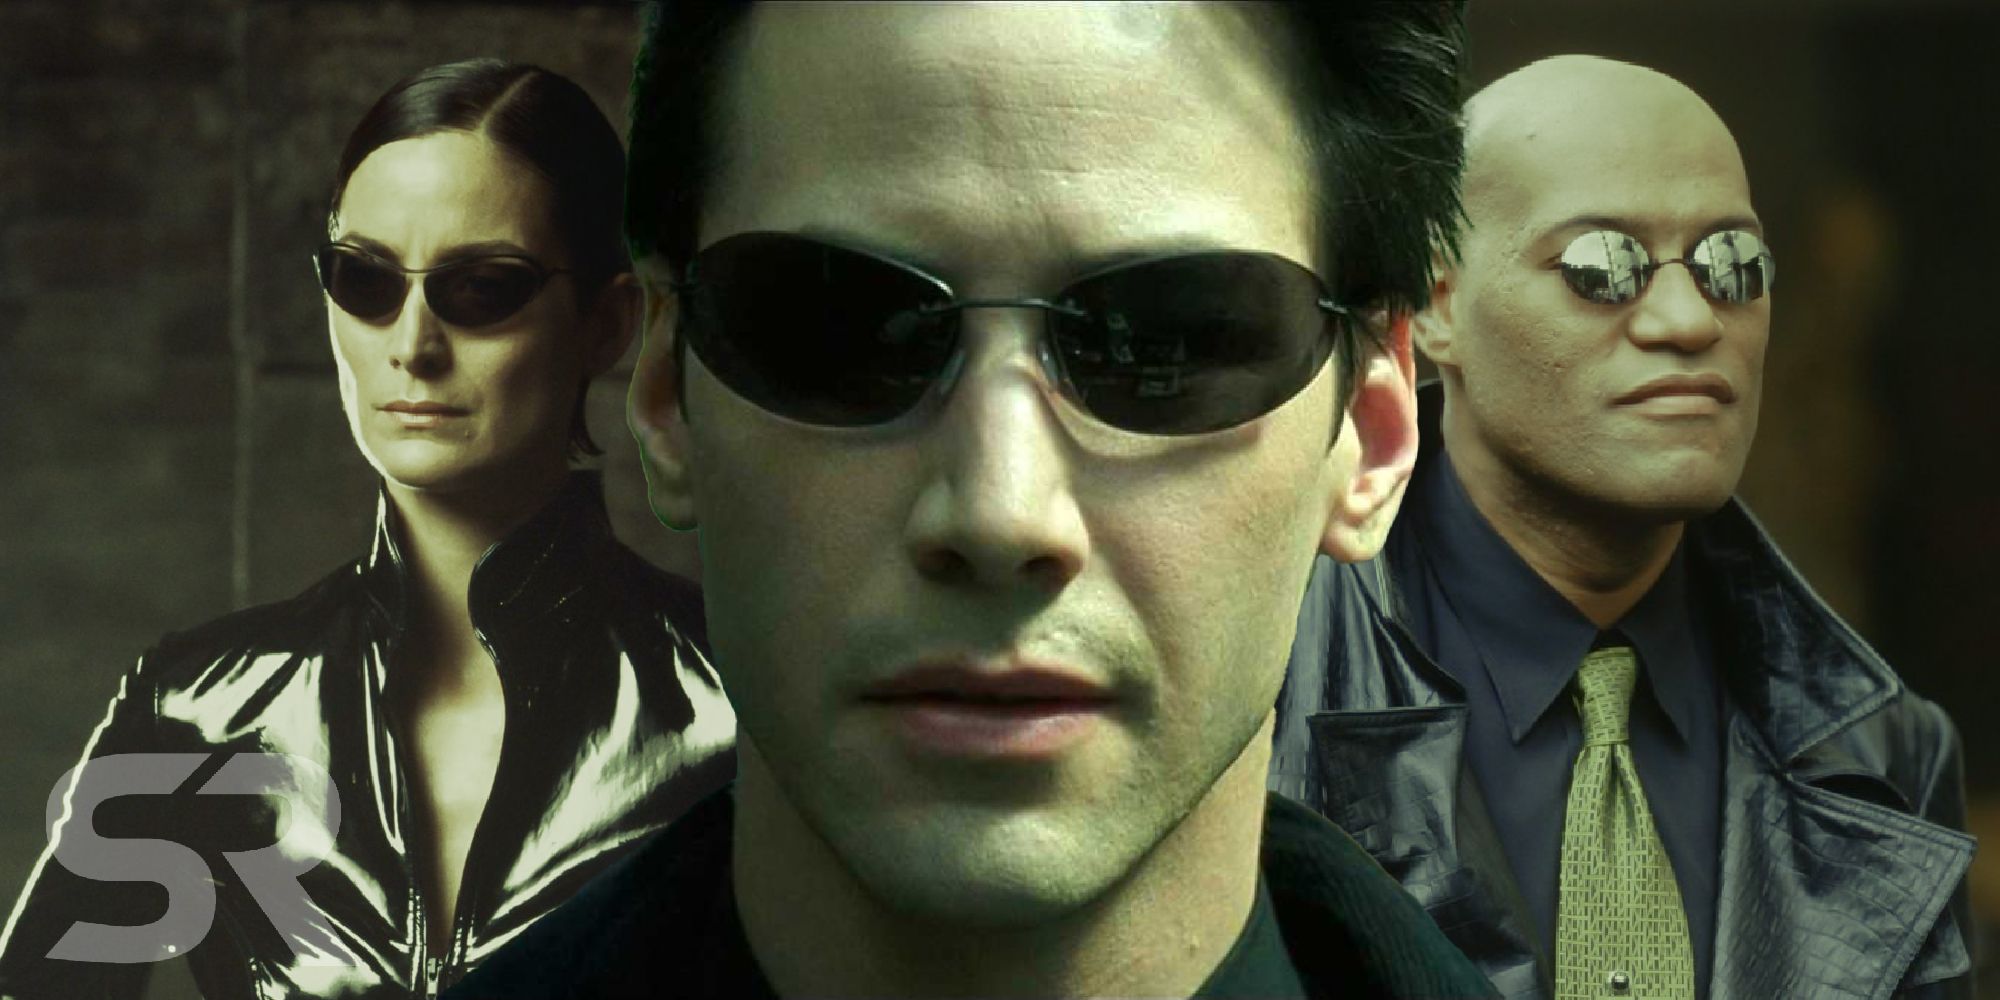 Neo Morpheus and Trinity The Matrix